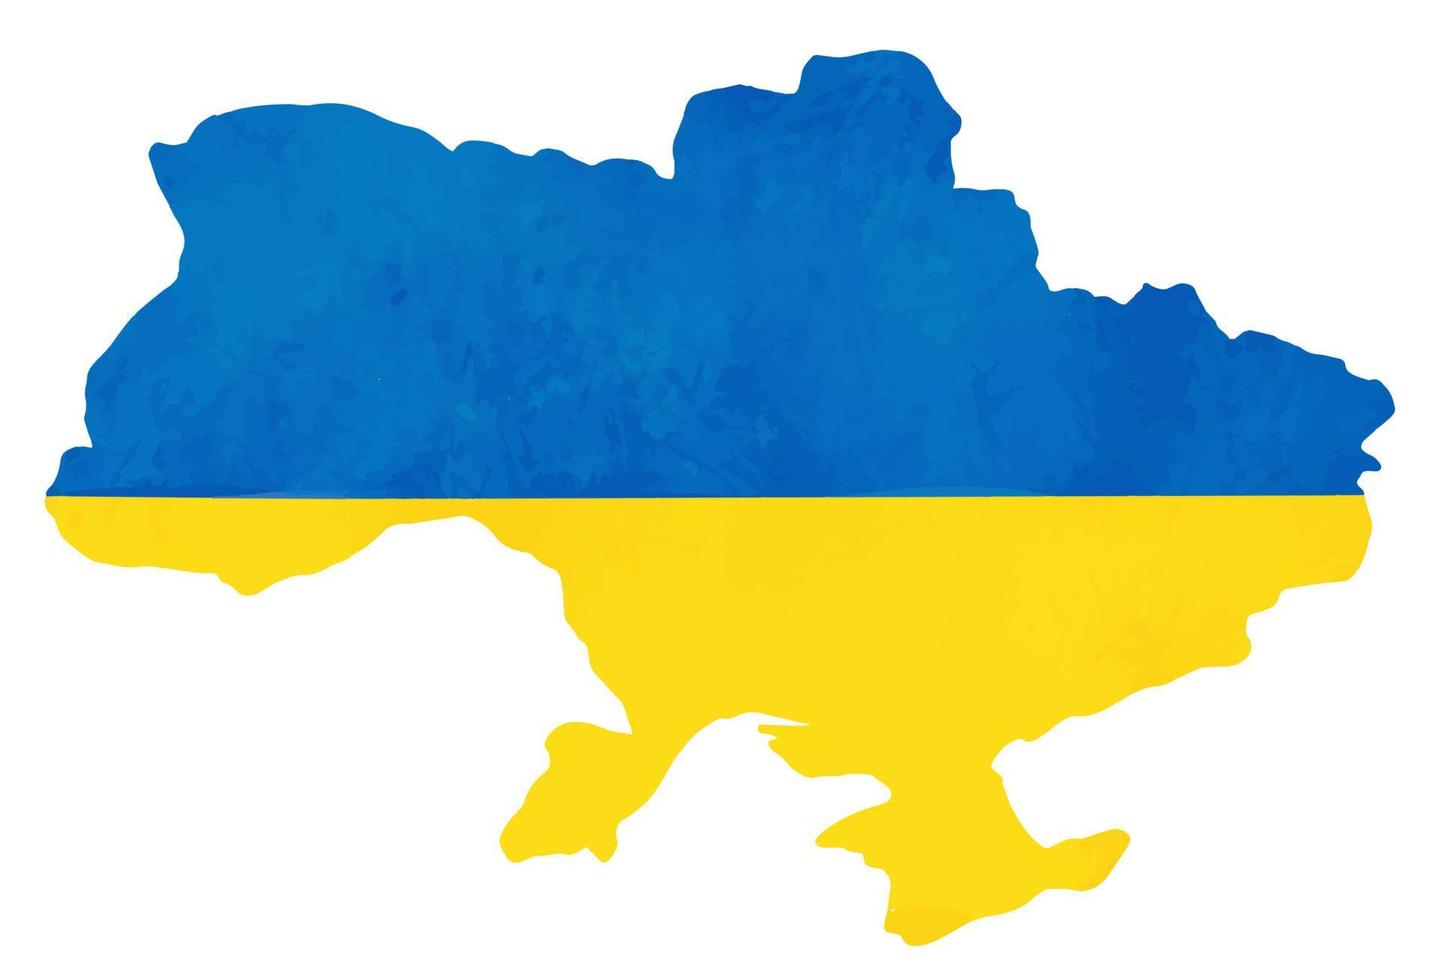 Oekraïne Republiek vector pictogram symbool. vrede en oorlog concept illustratie. officiële nationaliteit Oekraïense mensen of vlaglabel. gele en blauwe kleur voor de vlag van Oekraïne.